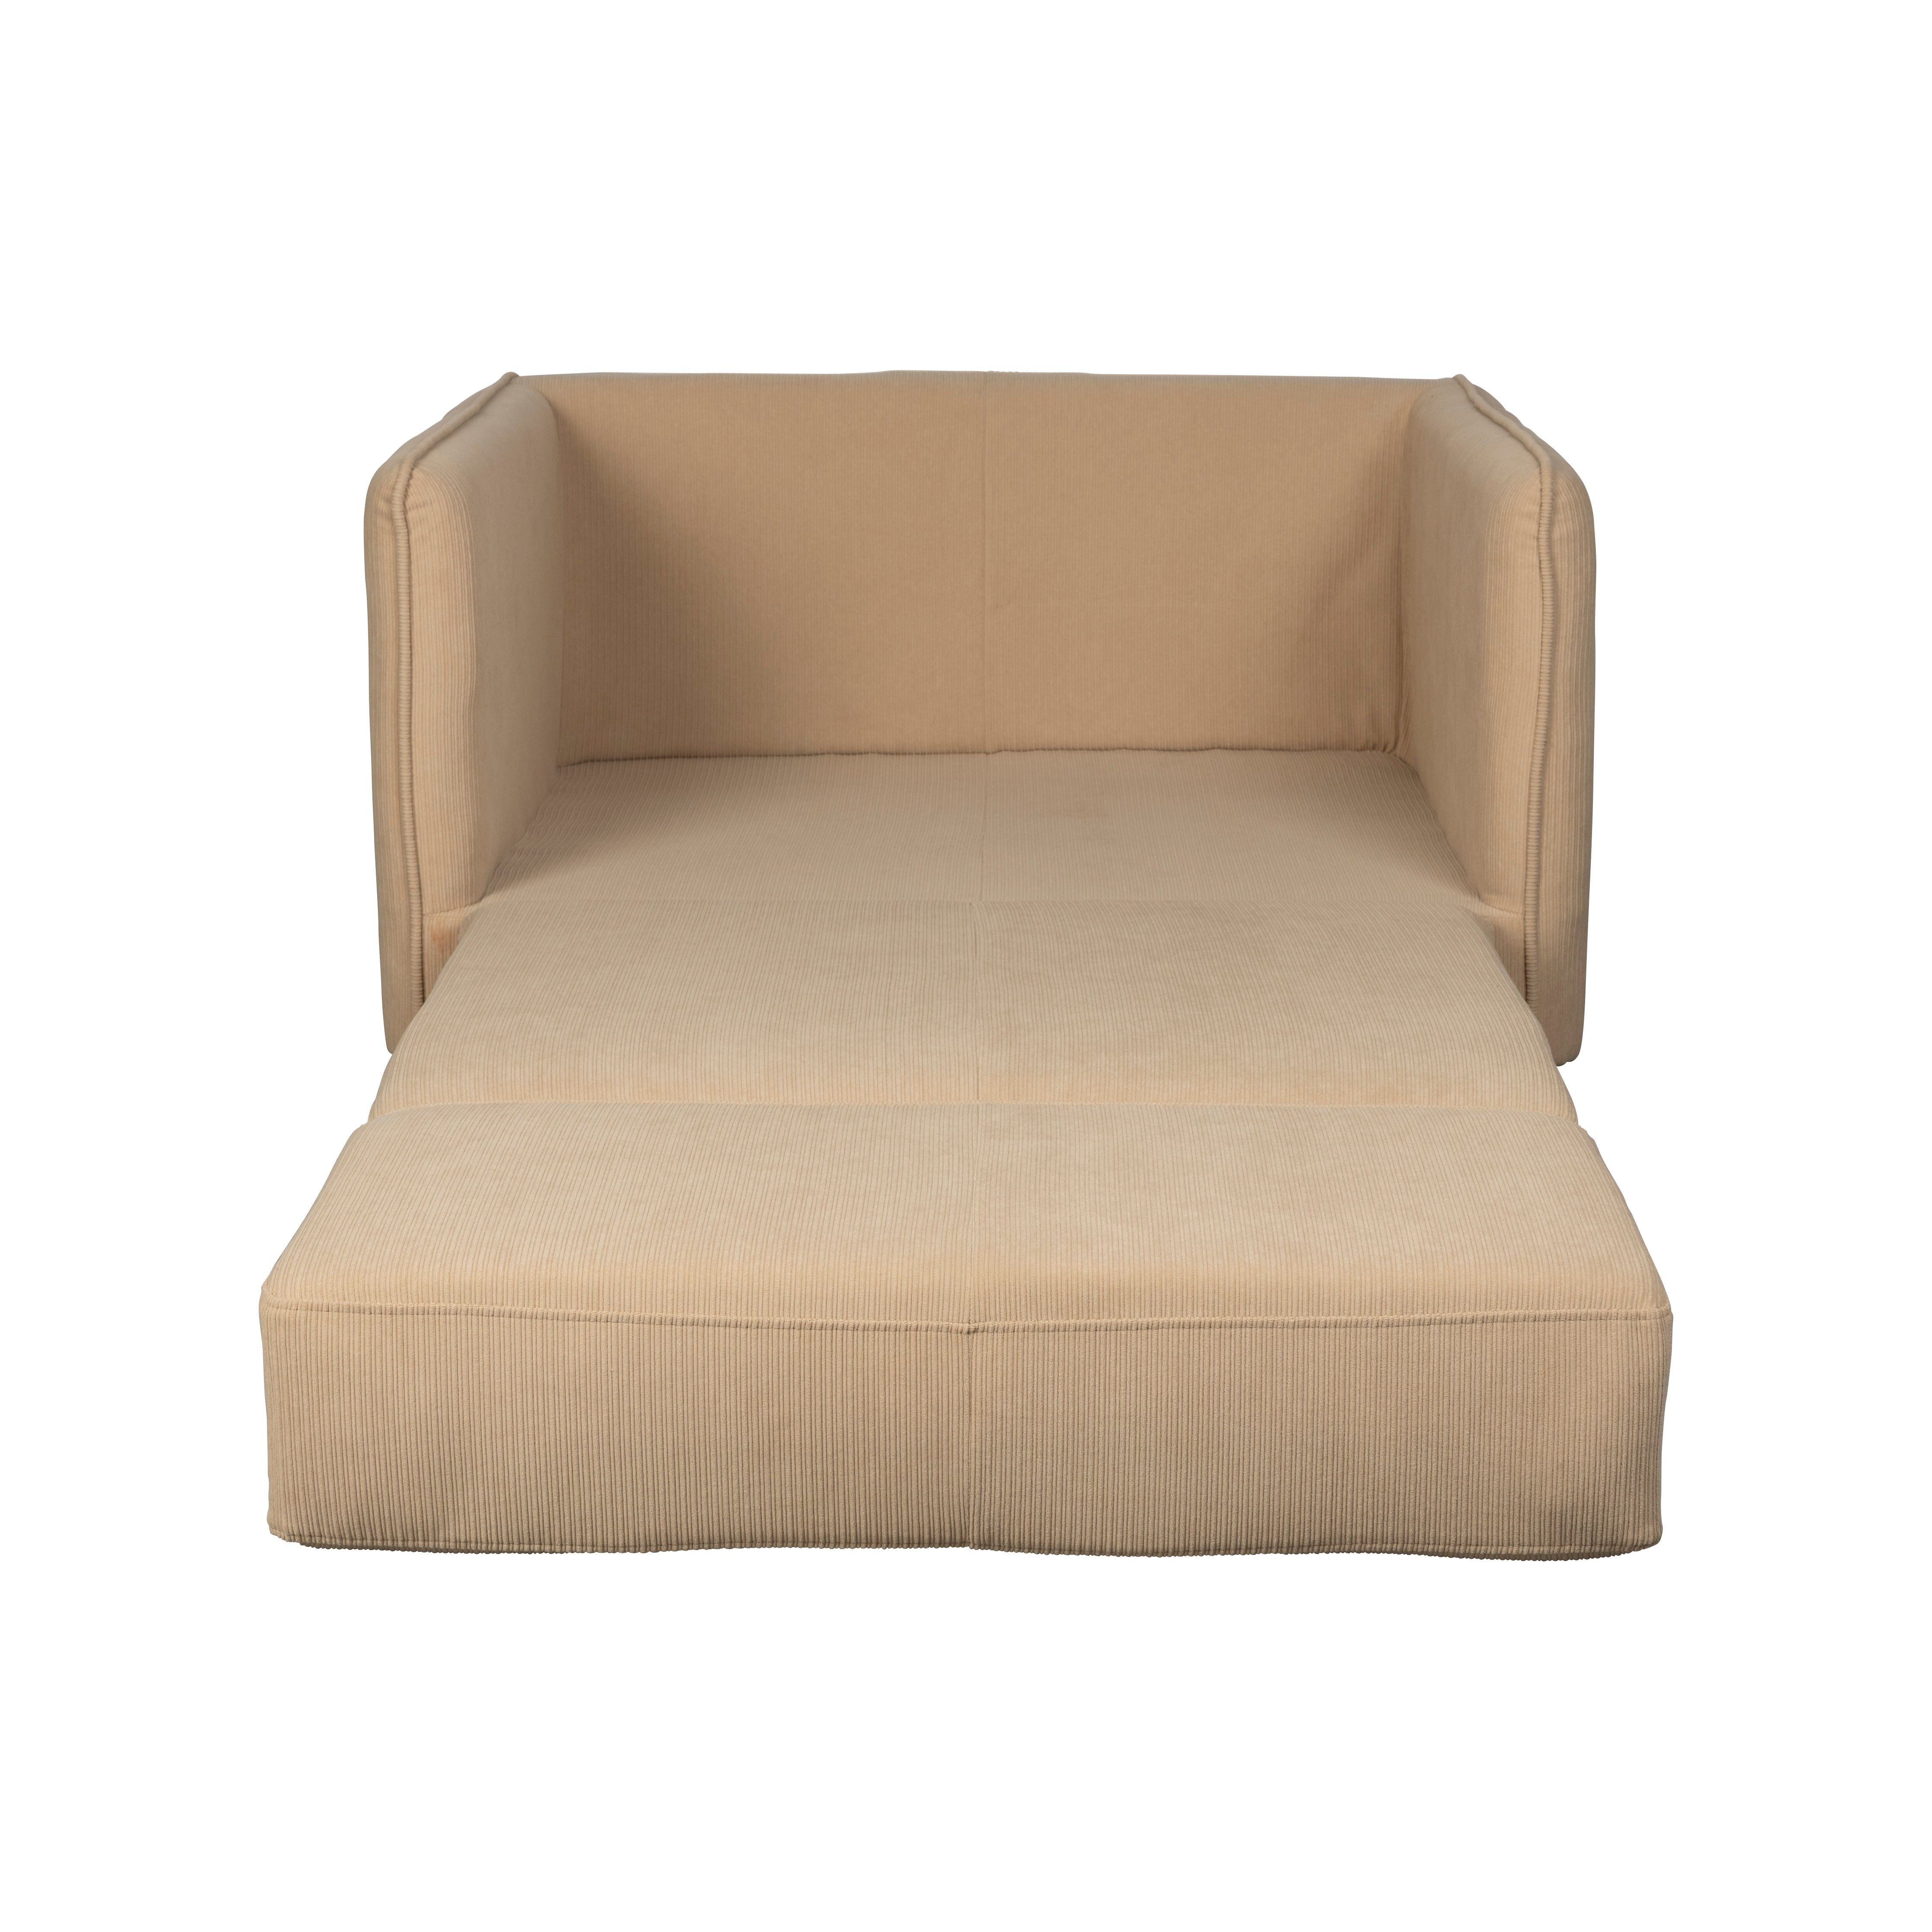 Love seat sofa bed jopie beige